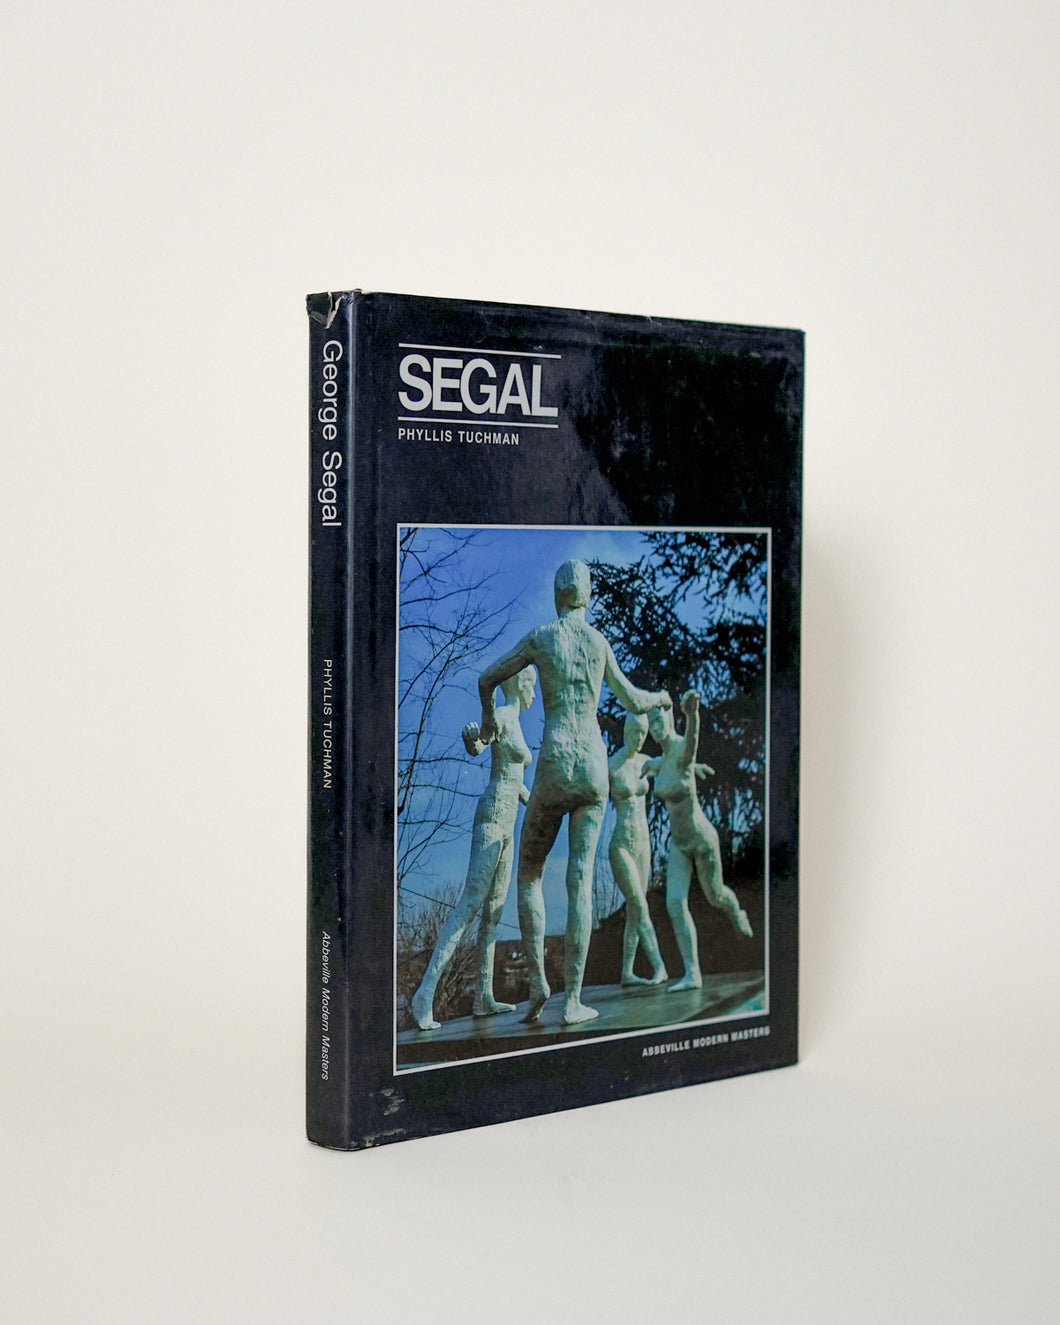 George Segal by Phyllis Tuchman